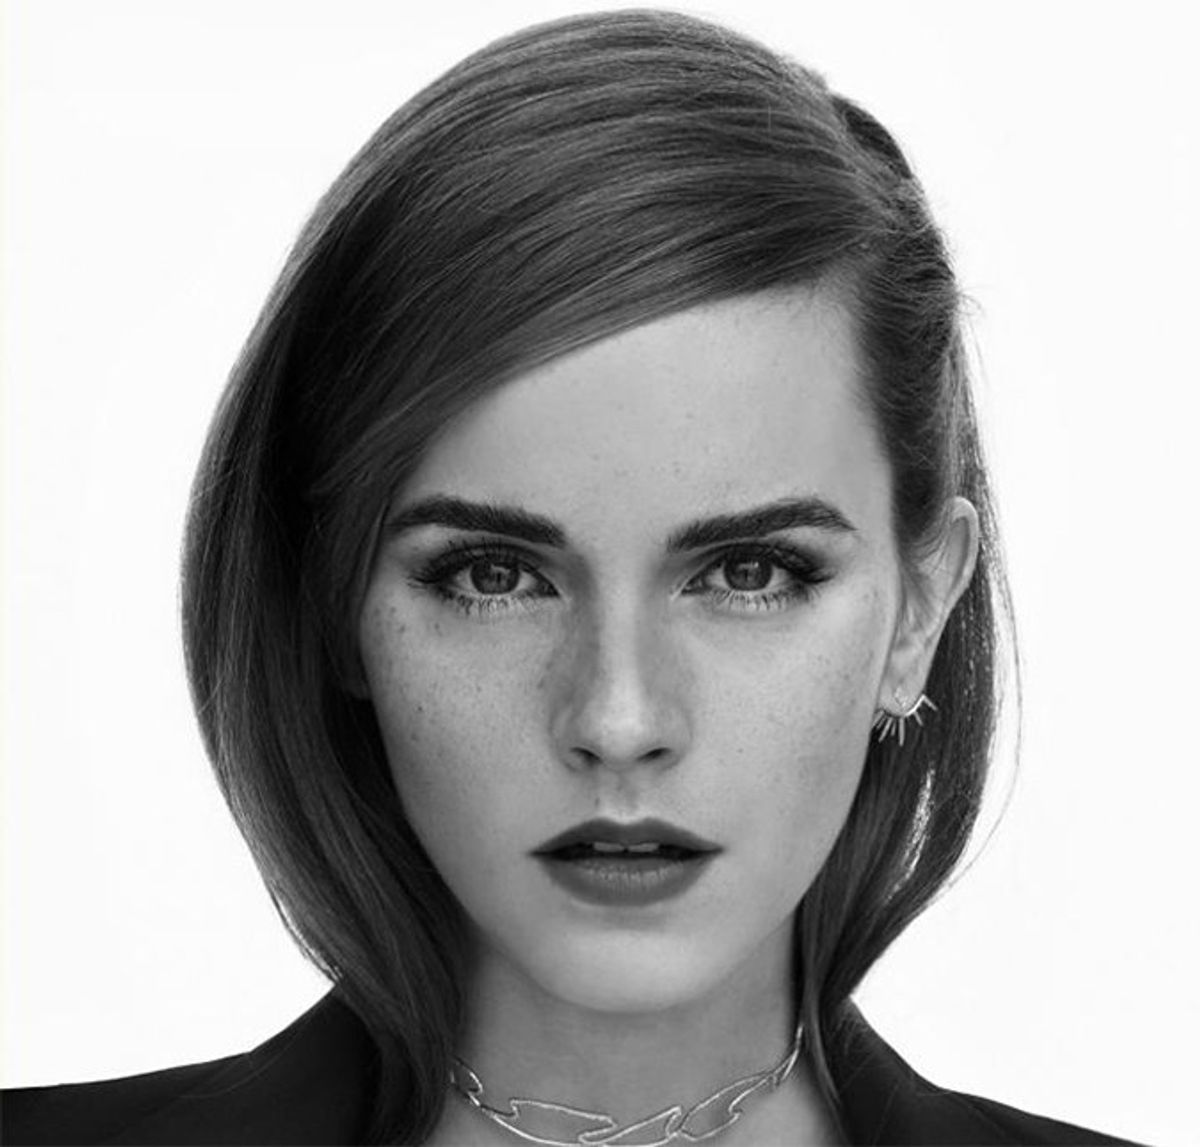 10 Reasons To L-O-V-E Emma Watson